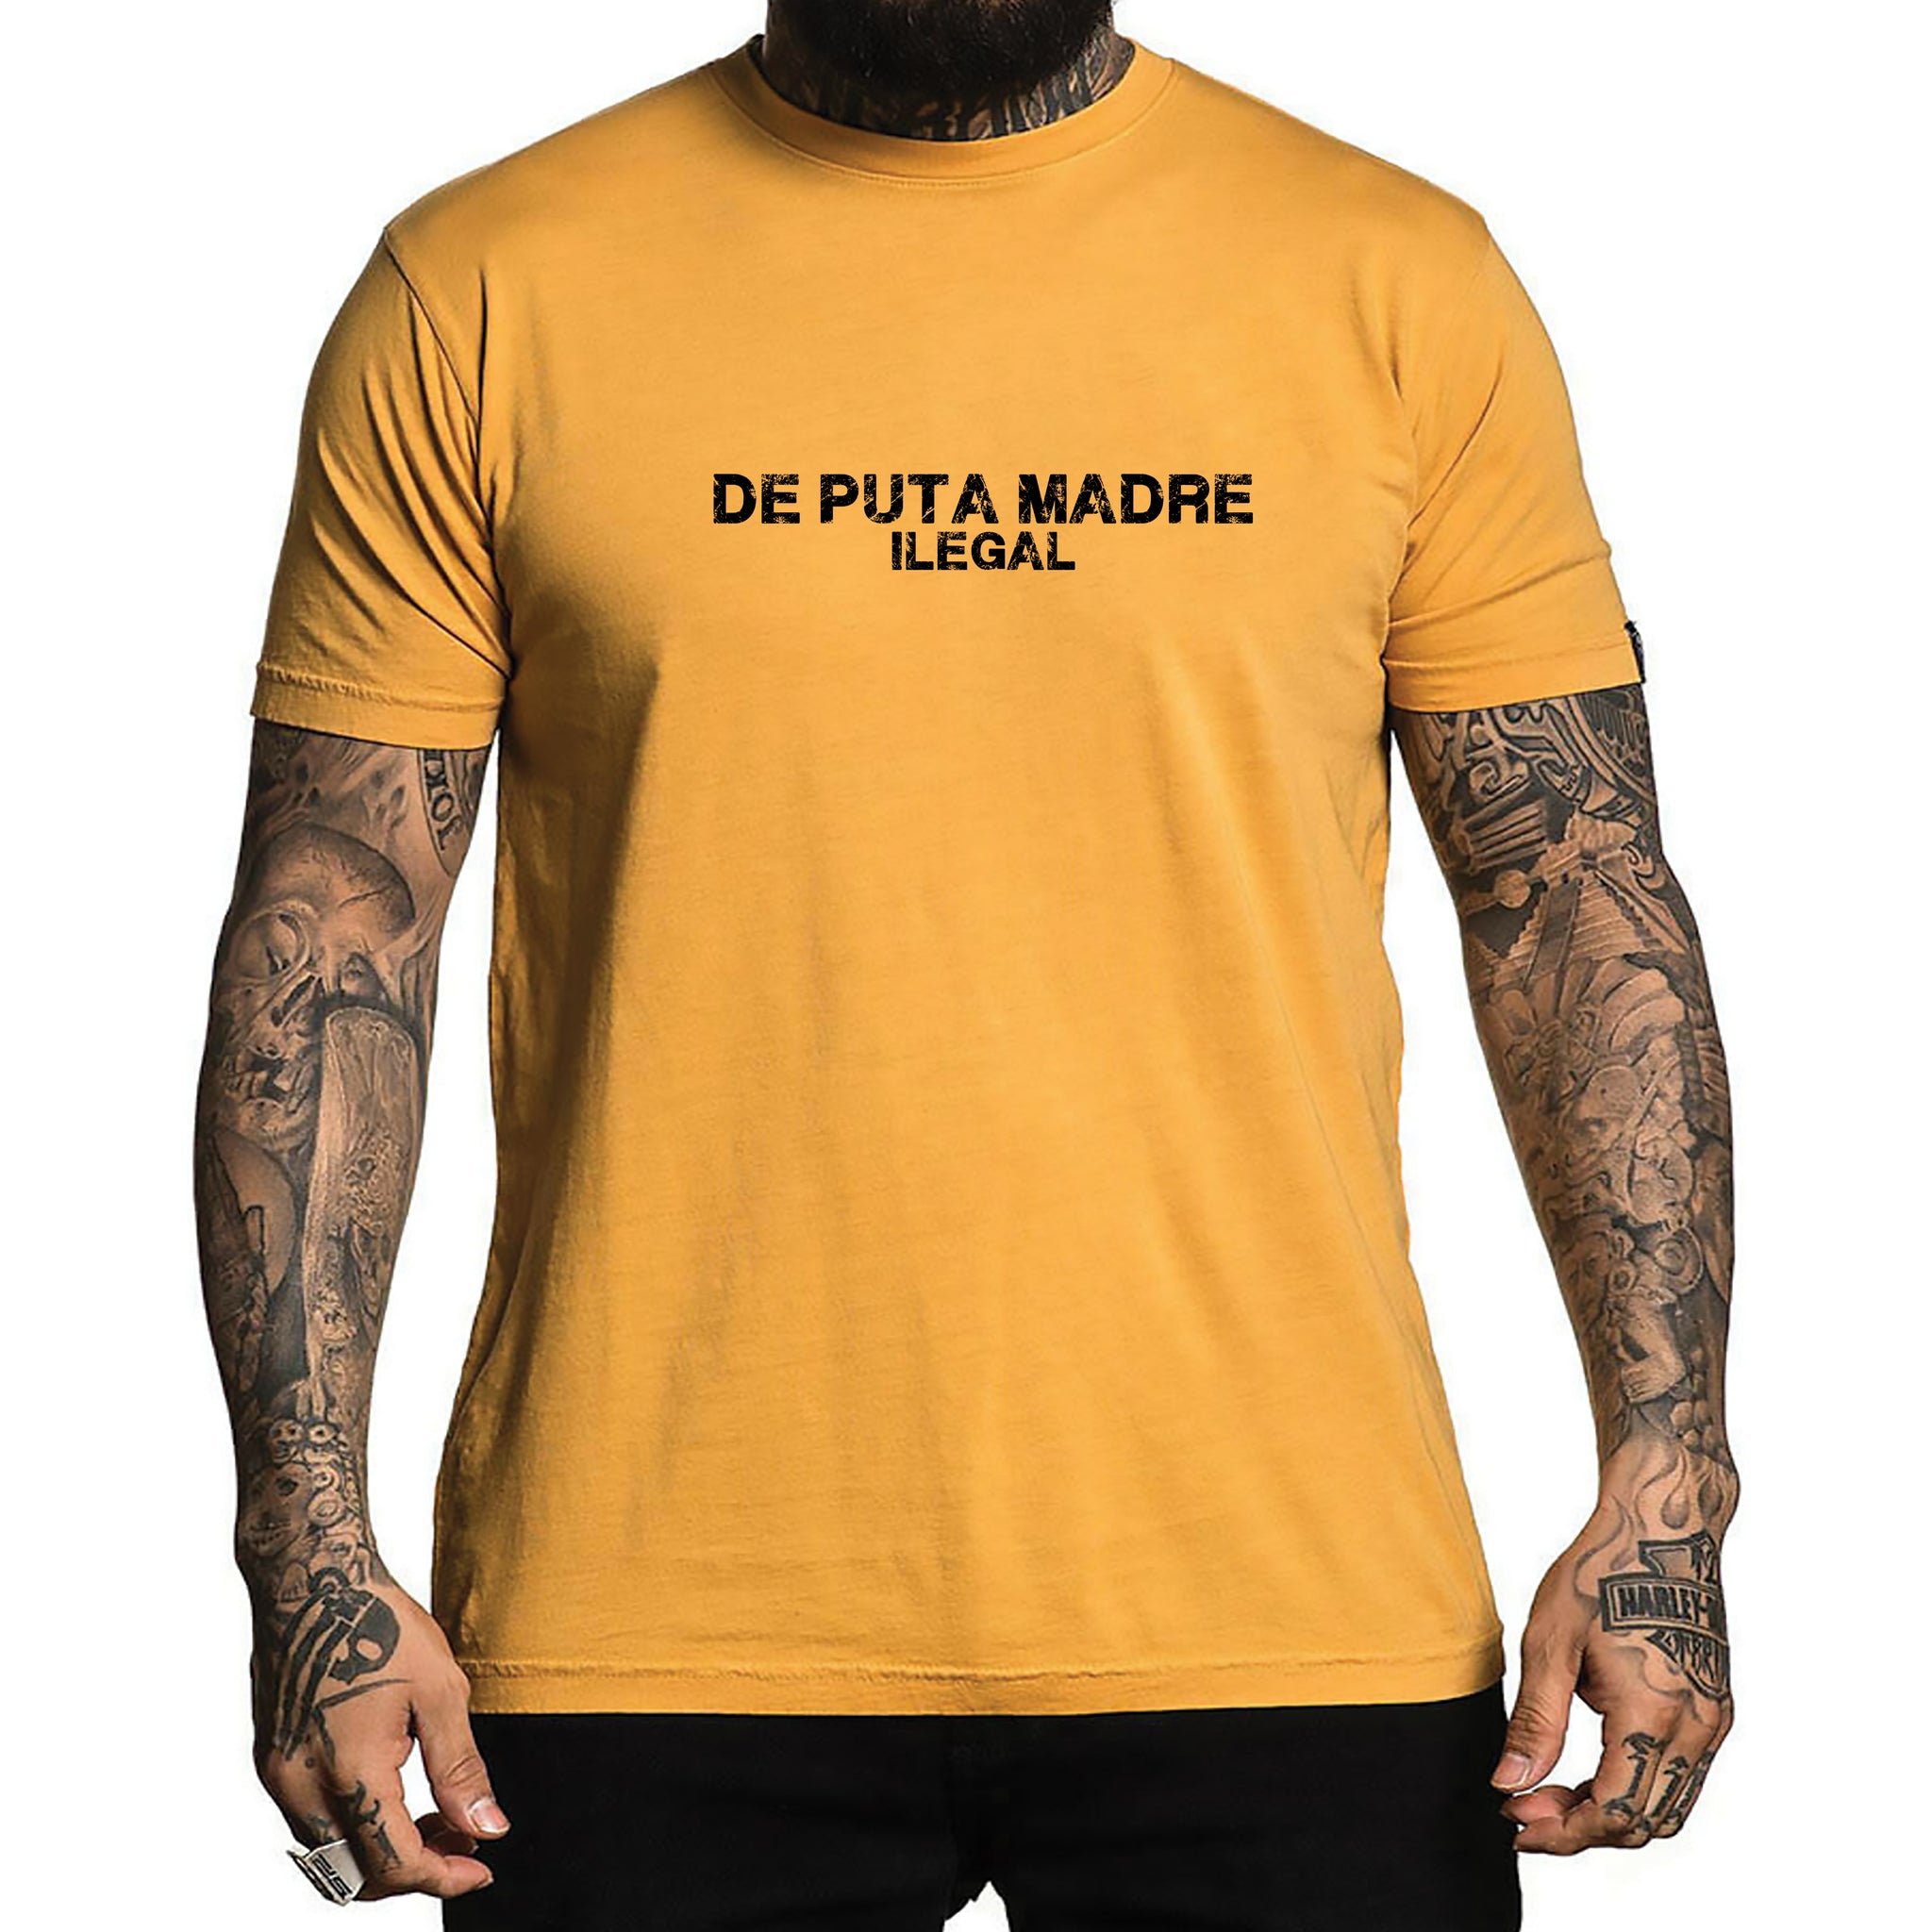 DPM69 Herren T-Shirt I LEGAL